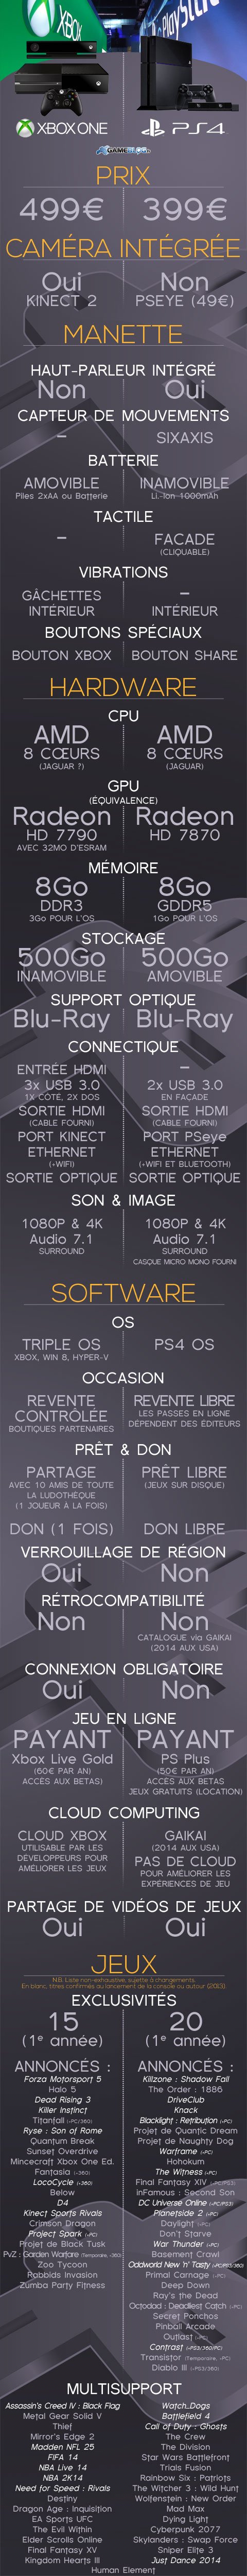 XboxOne-vs-PS4_Infographic_480_6.jpg